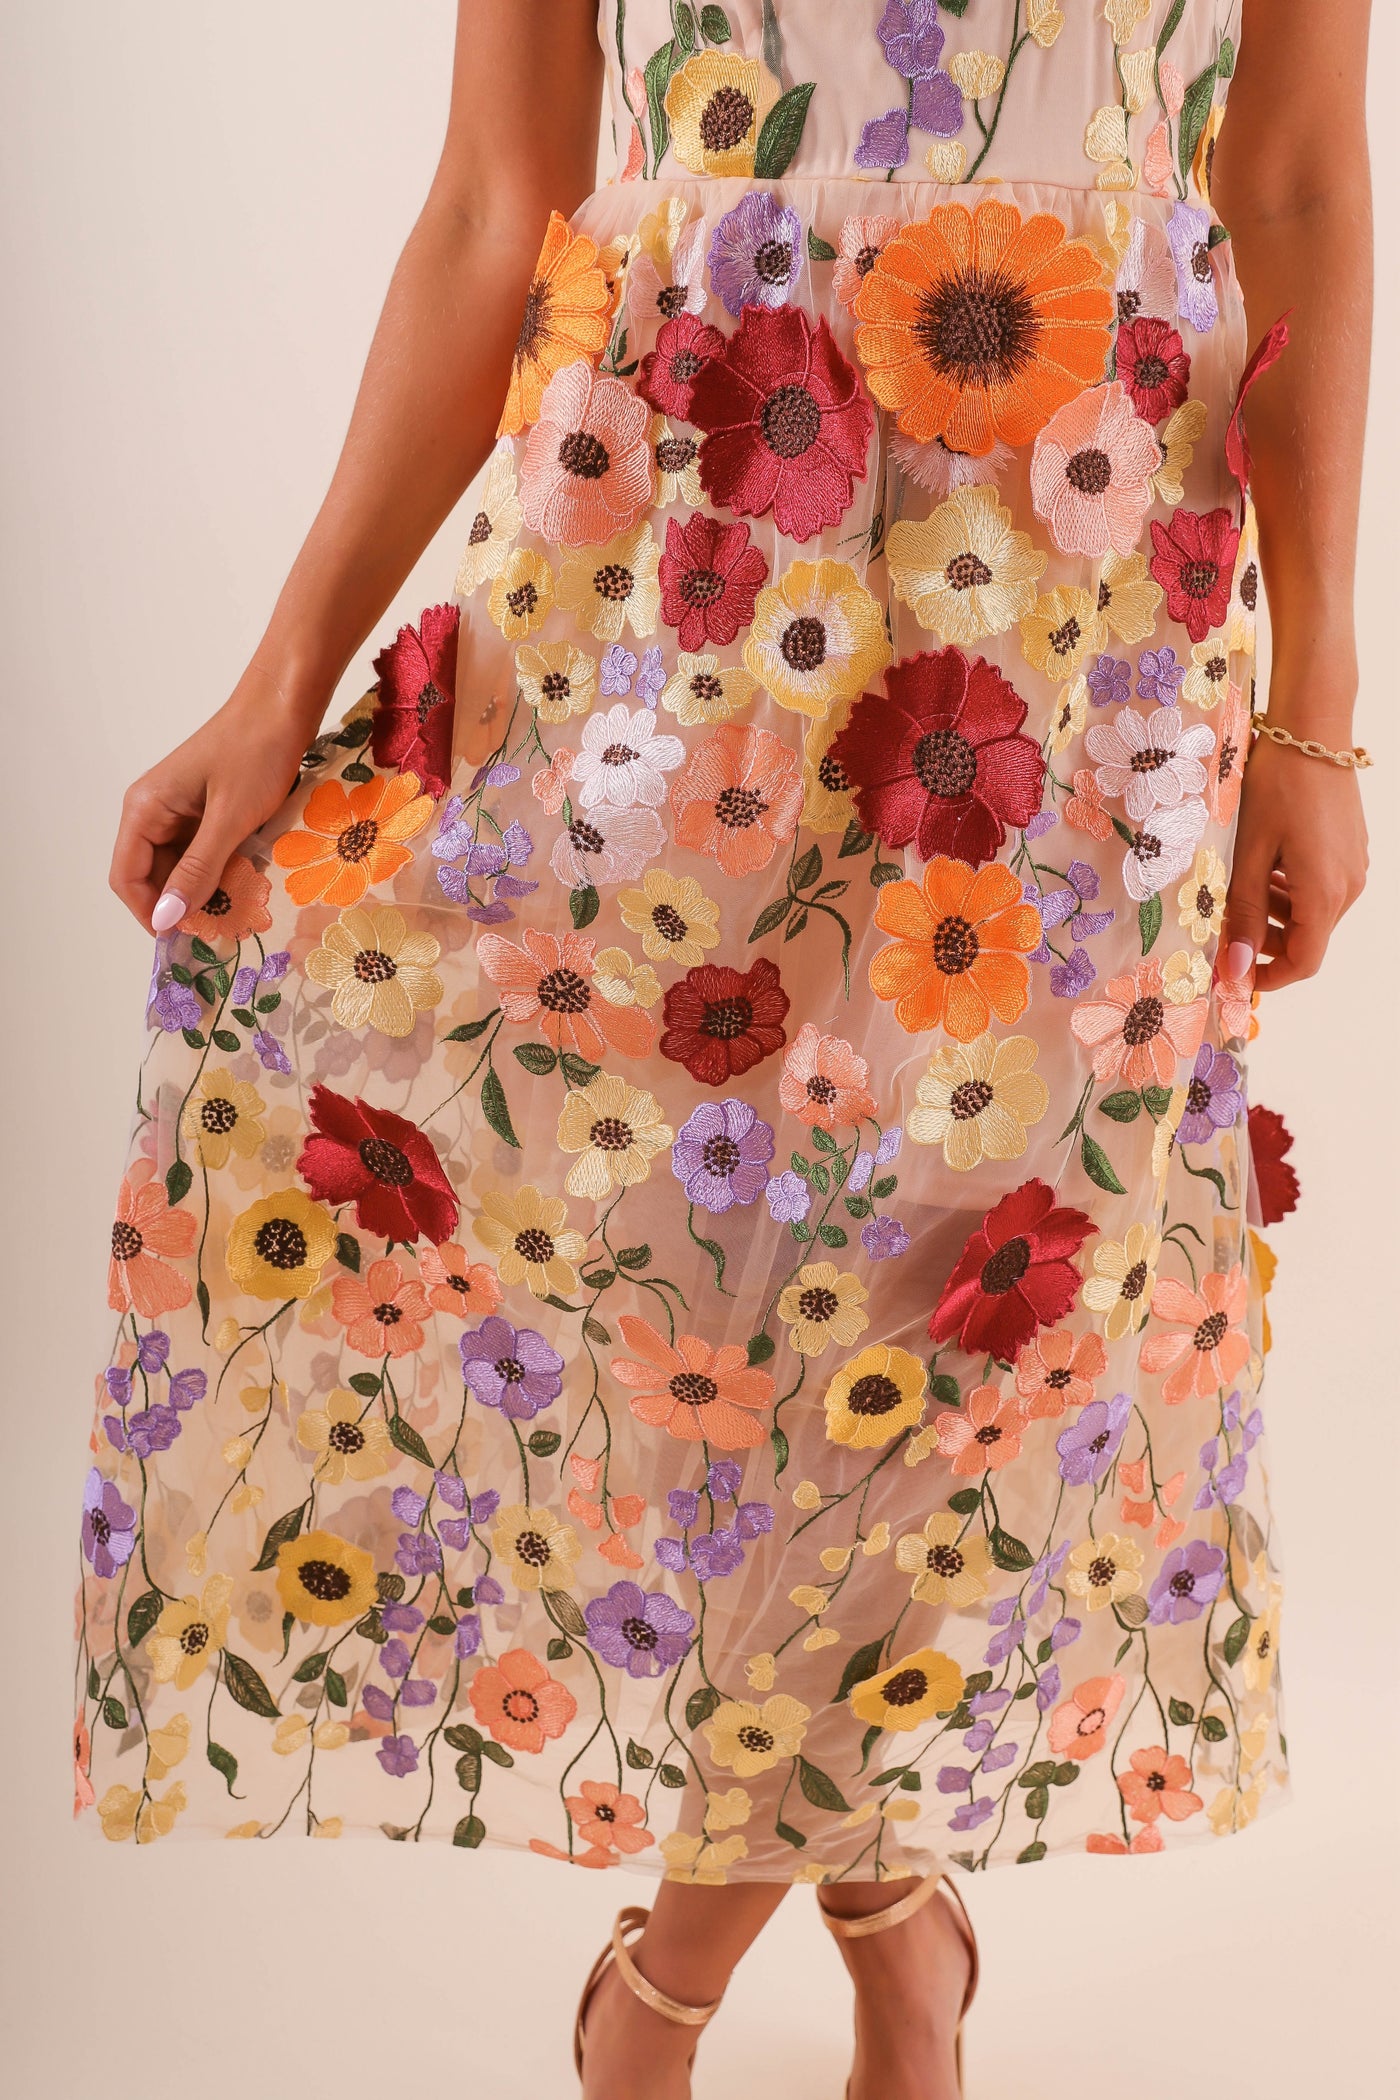 Women's 3D Flower Tulle Midi Dress- Women's Special Occasion Flower Dress- Taylor Grammy's Dress